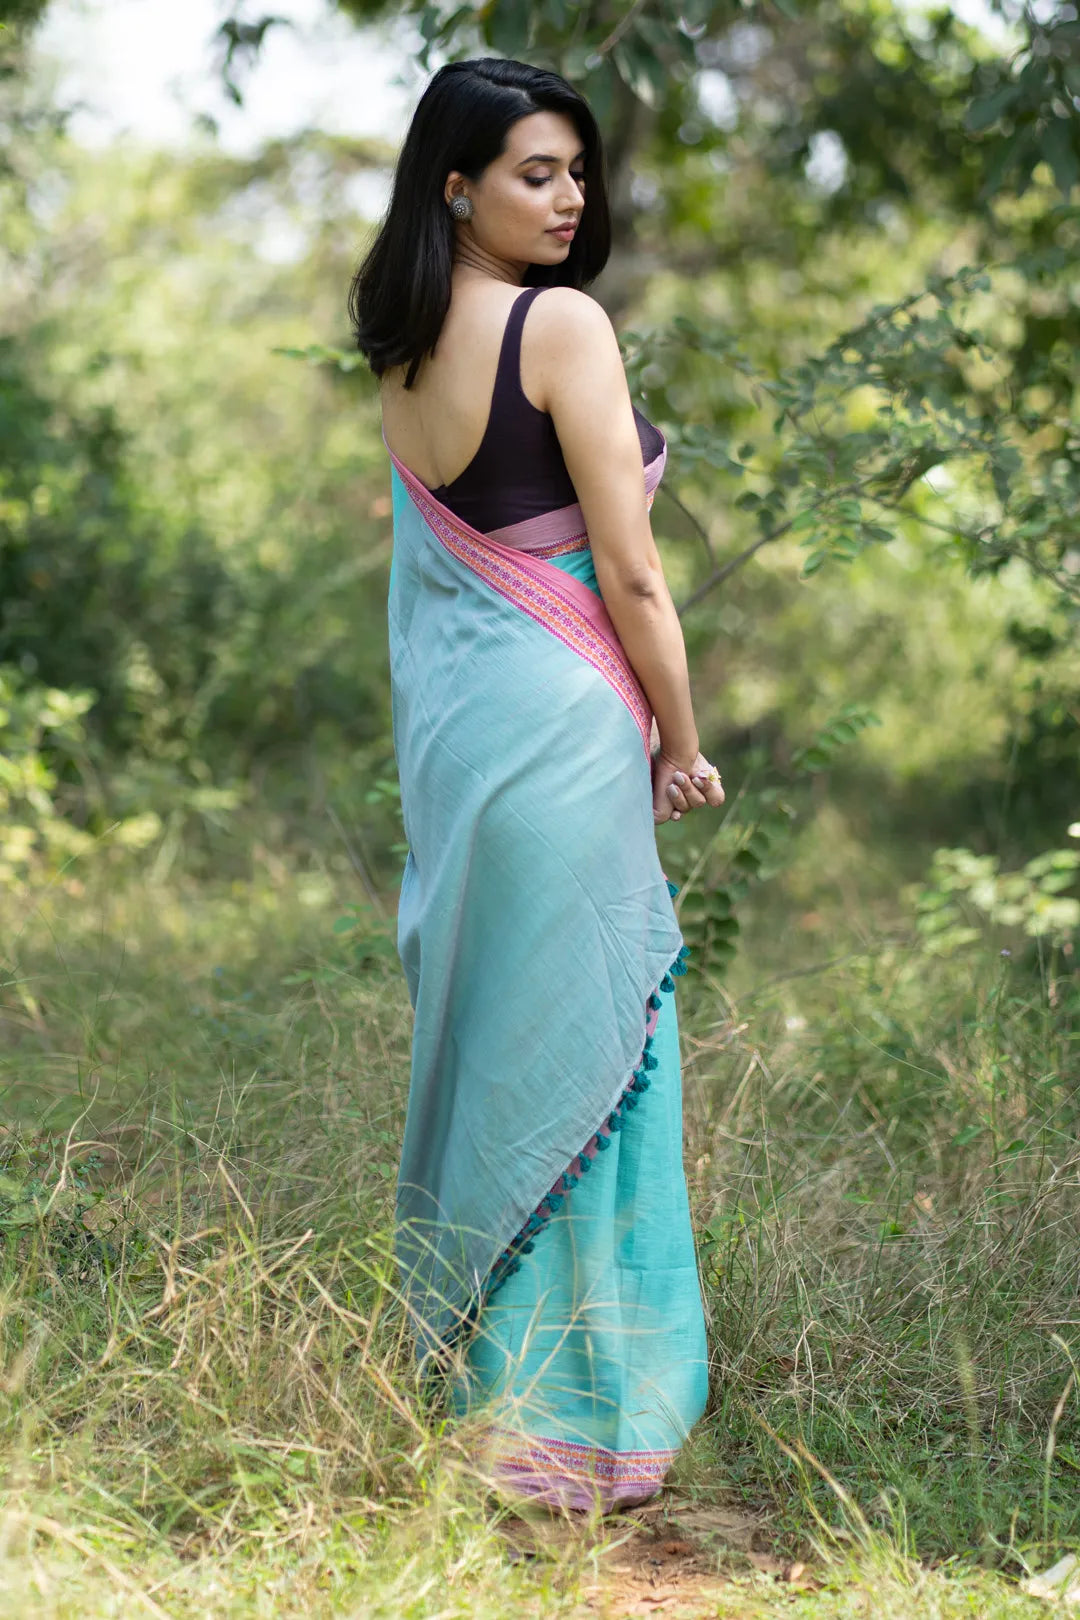 Shweta Tiwari looks hot in a simple cotton saree